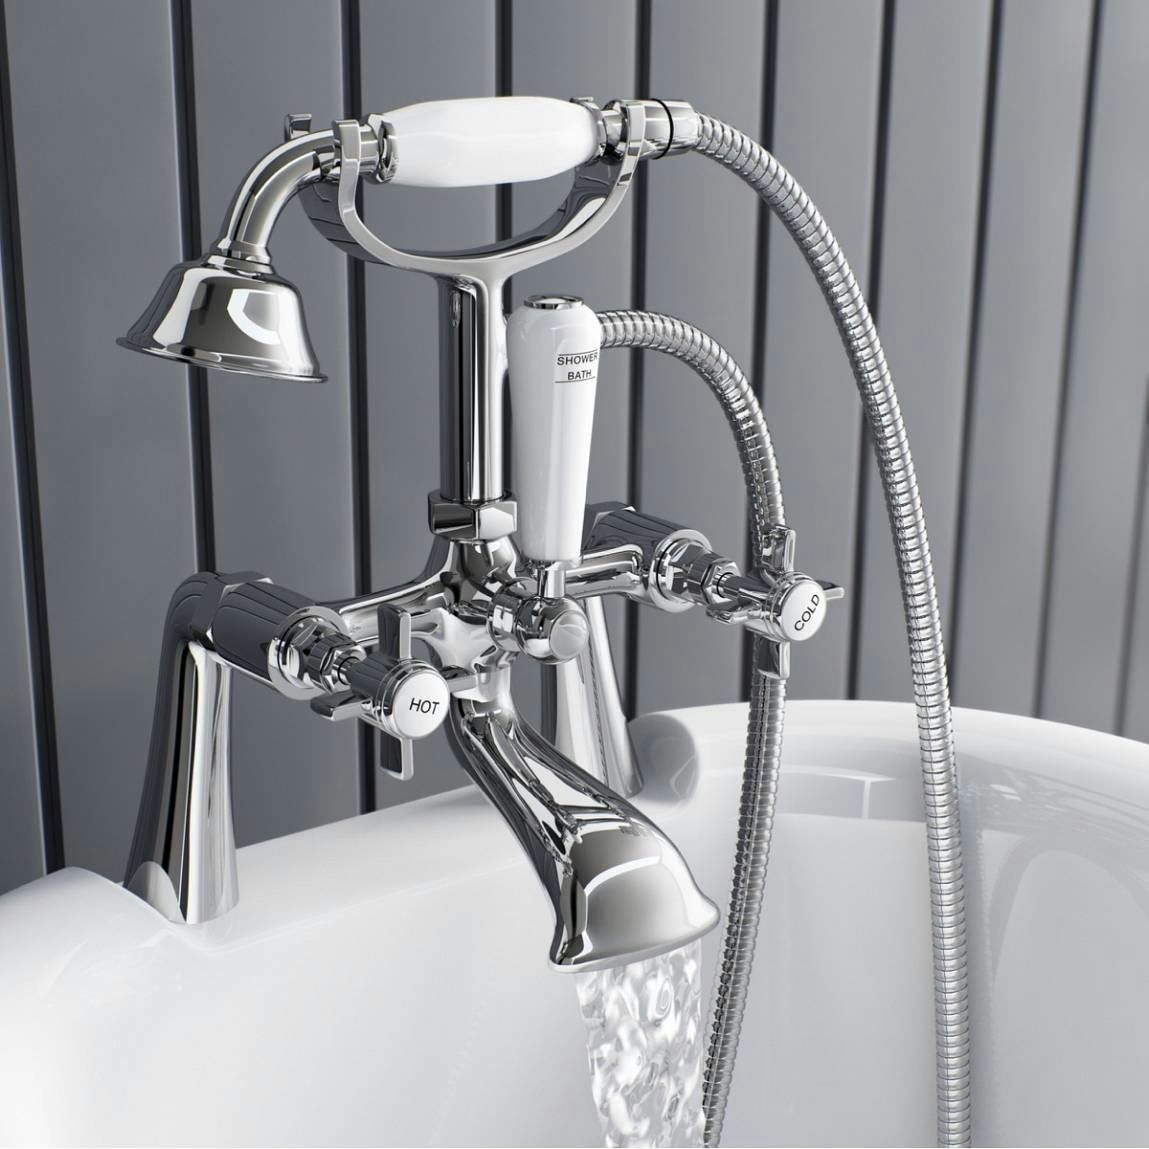 Dulwich bath shower mixer tap